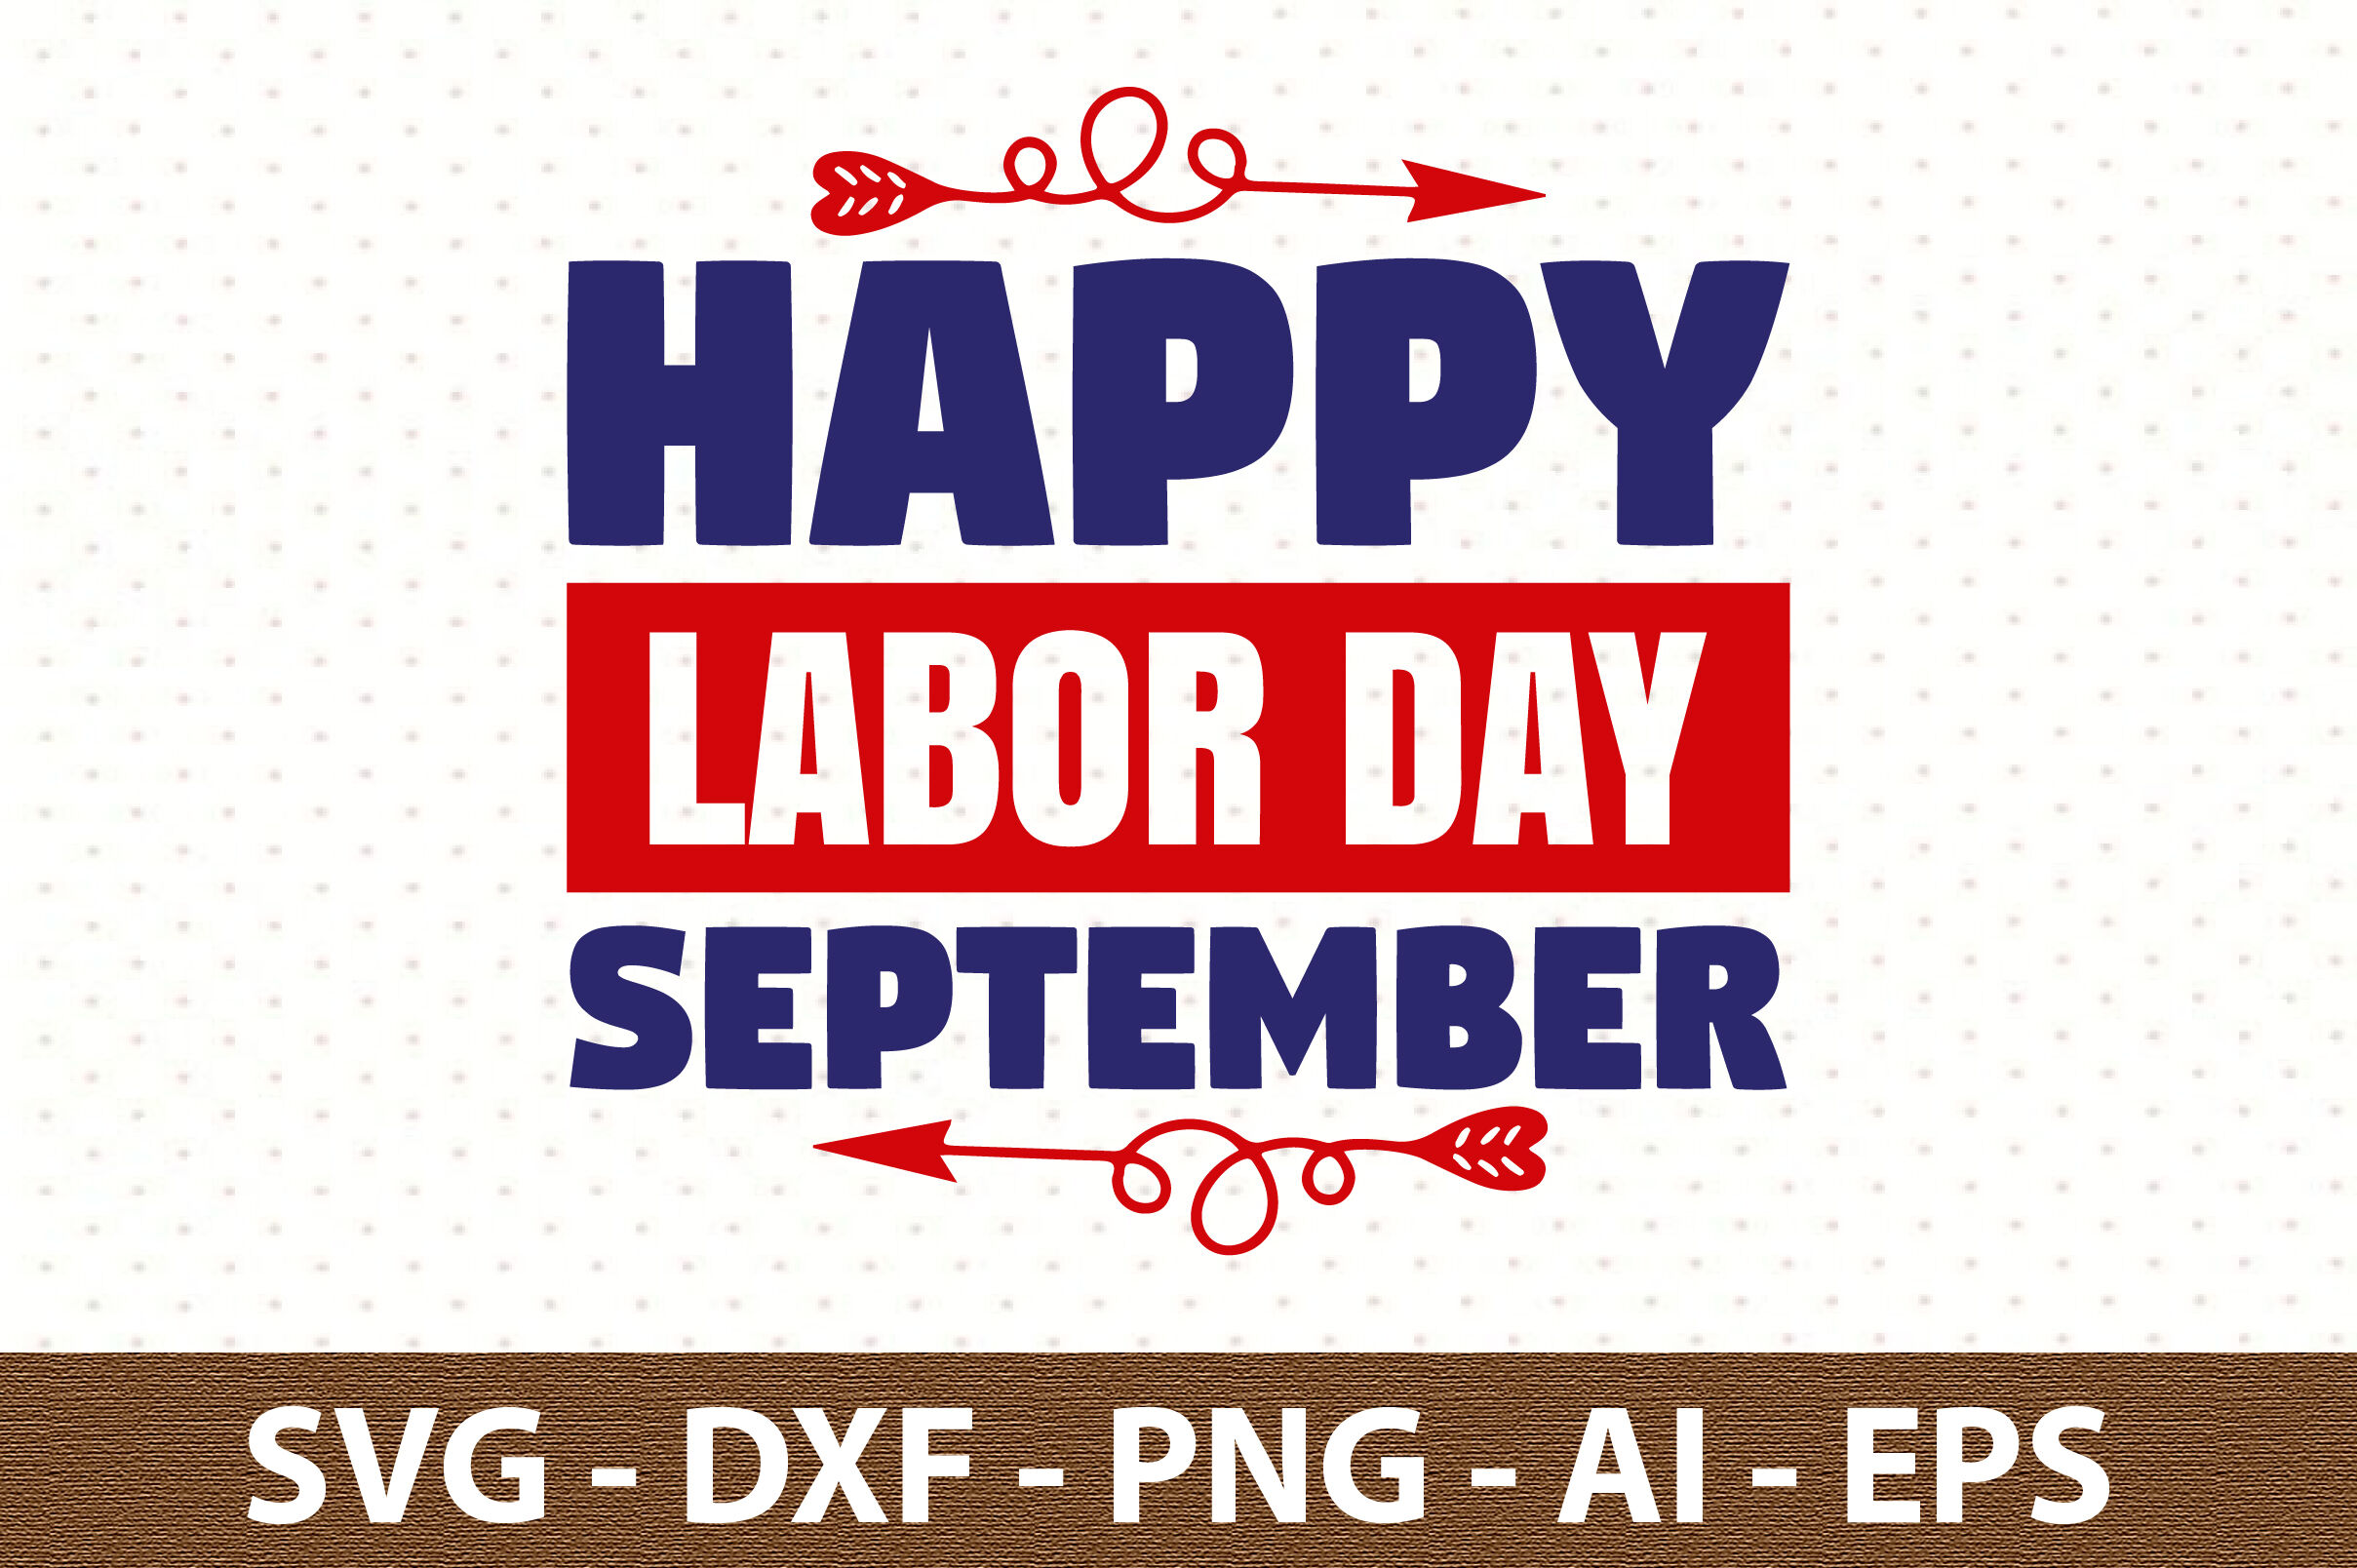 Happy Labor Day September svg By orpitaroy | TheHungryJPEG